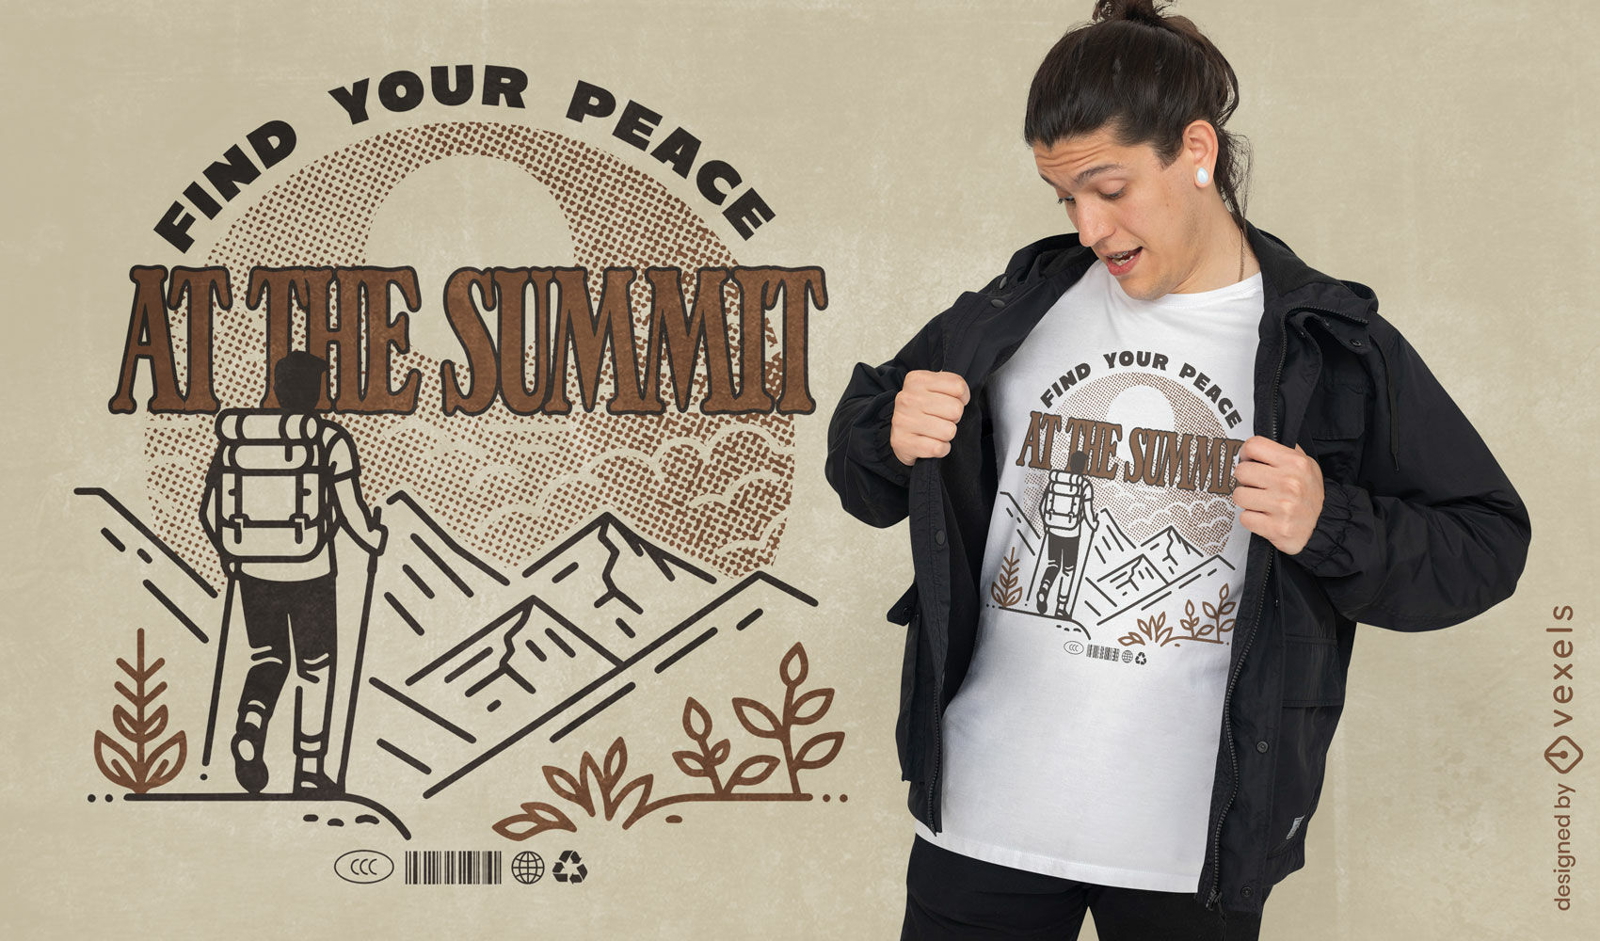 At the summit t-shirt design